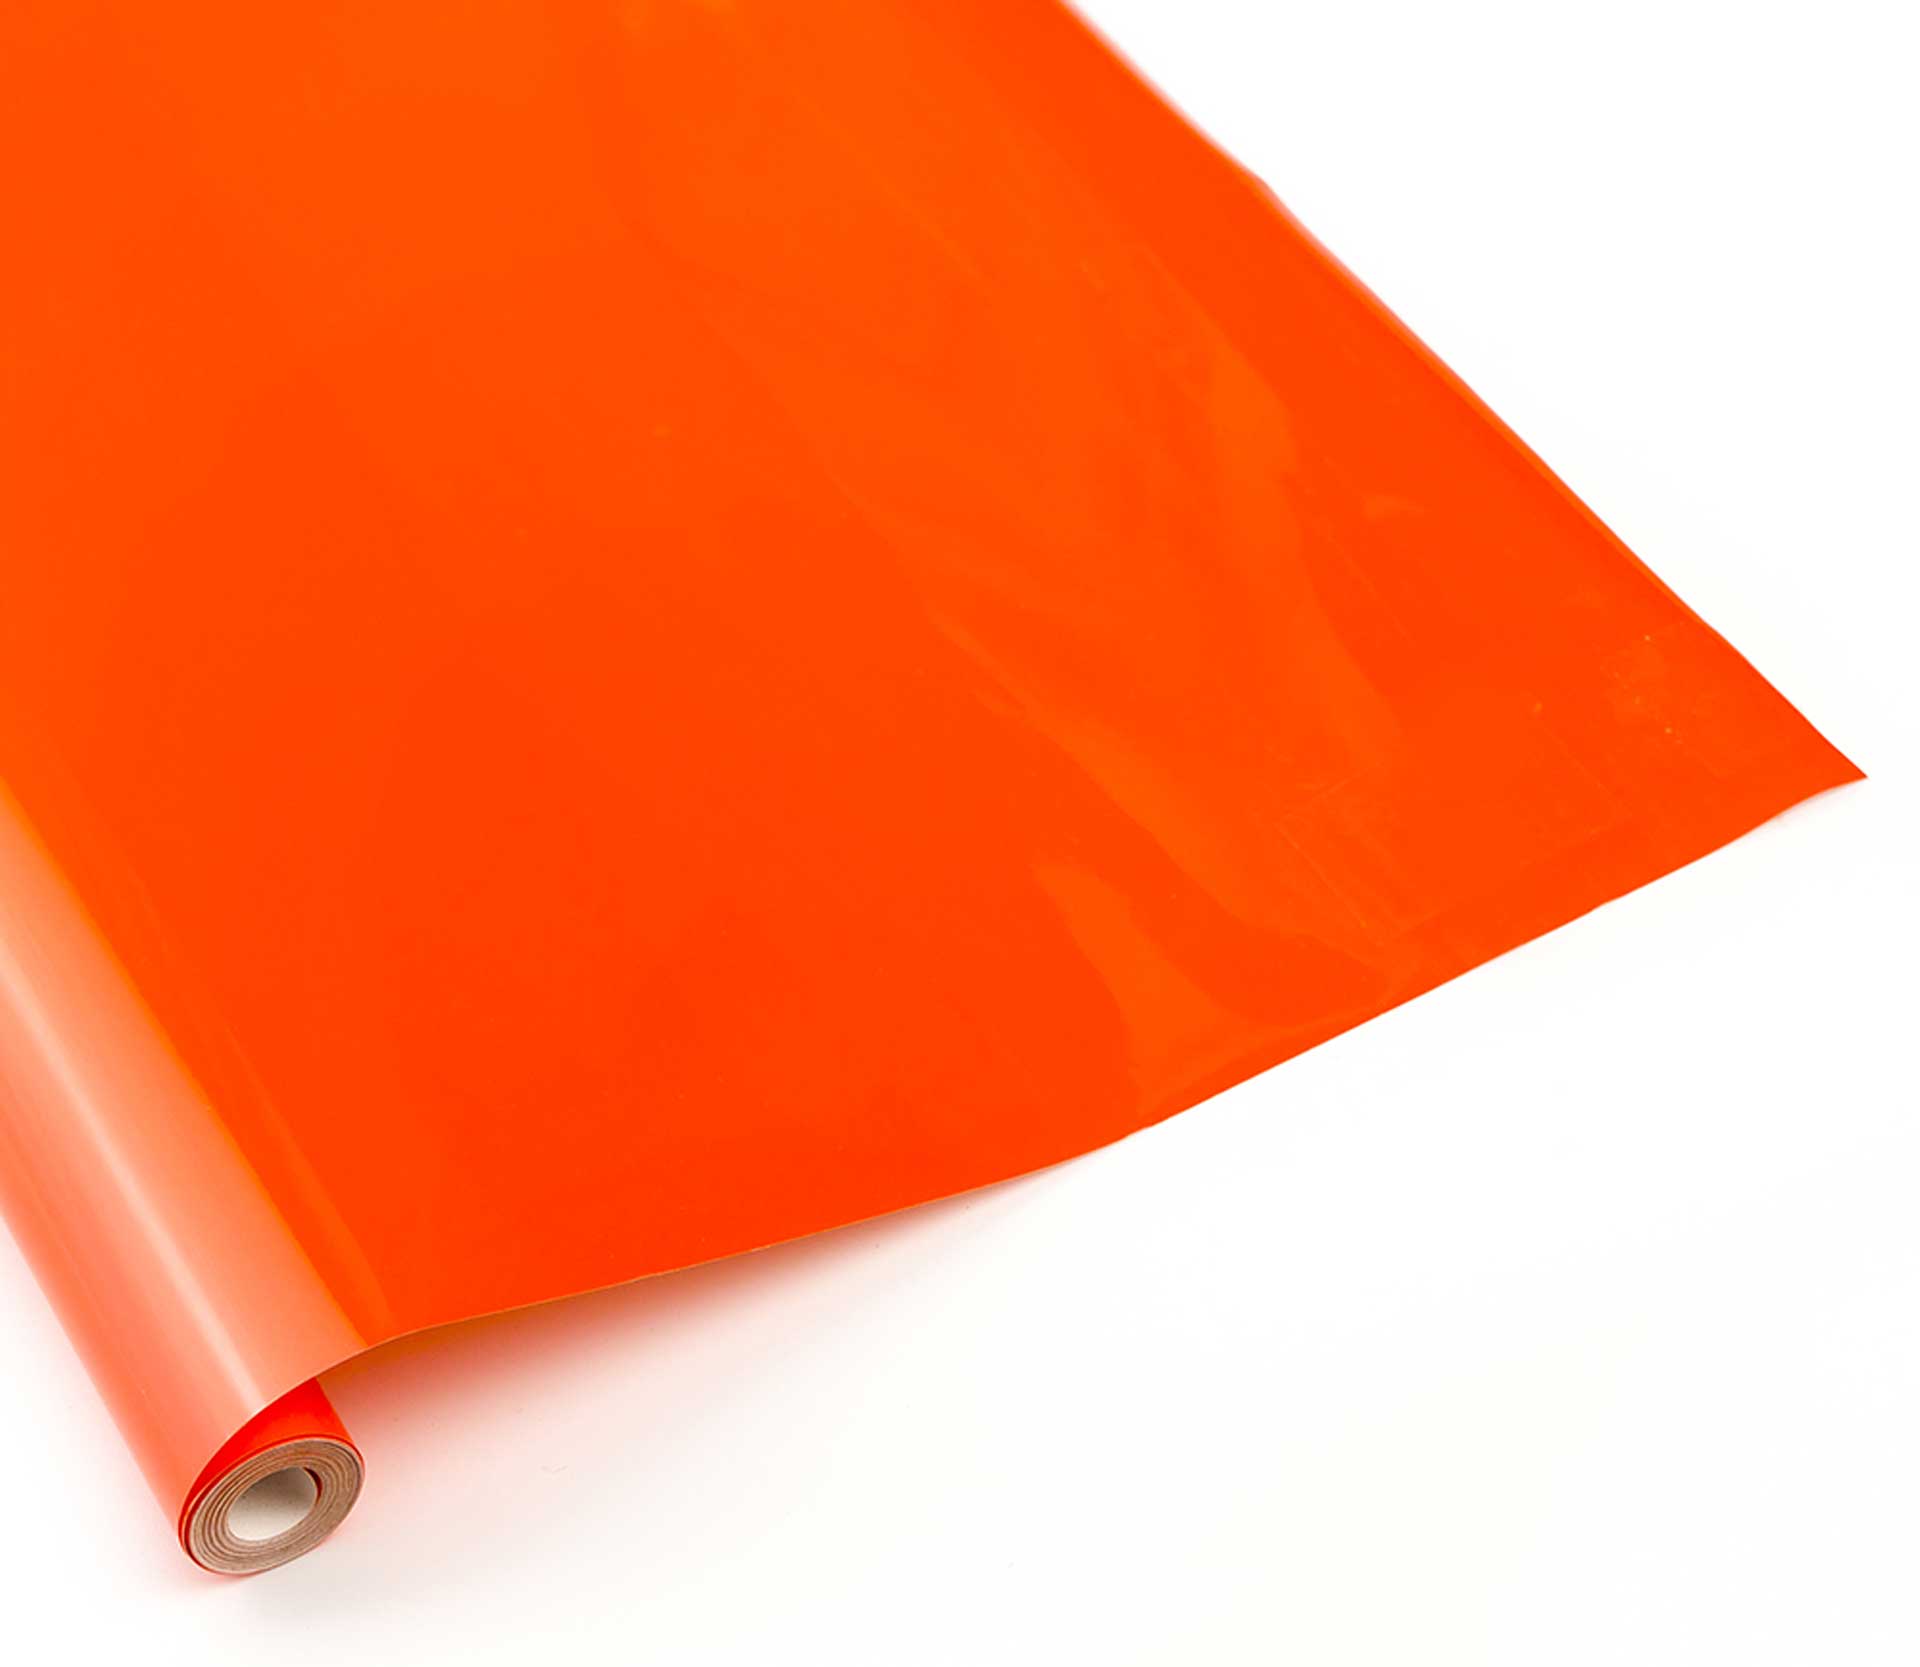 Planet-Hobby Iron-on foil orange 5 meters